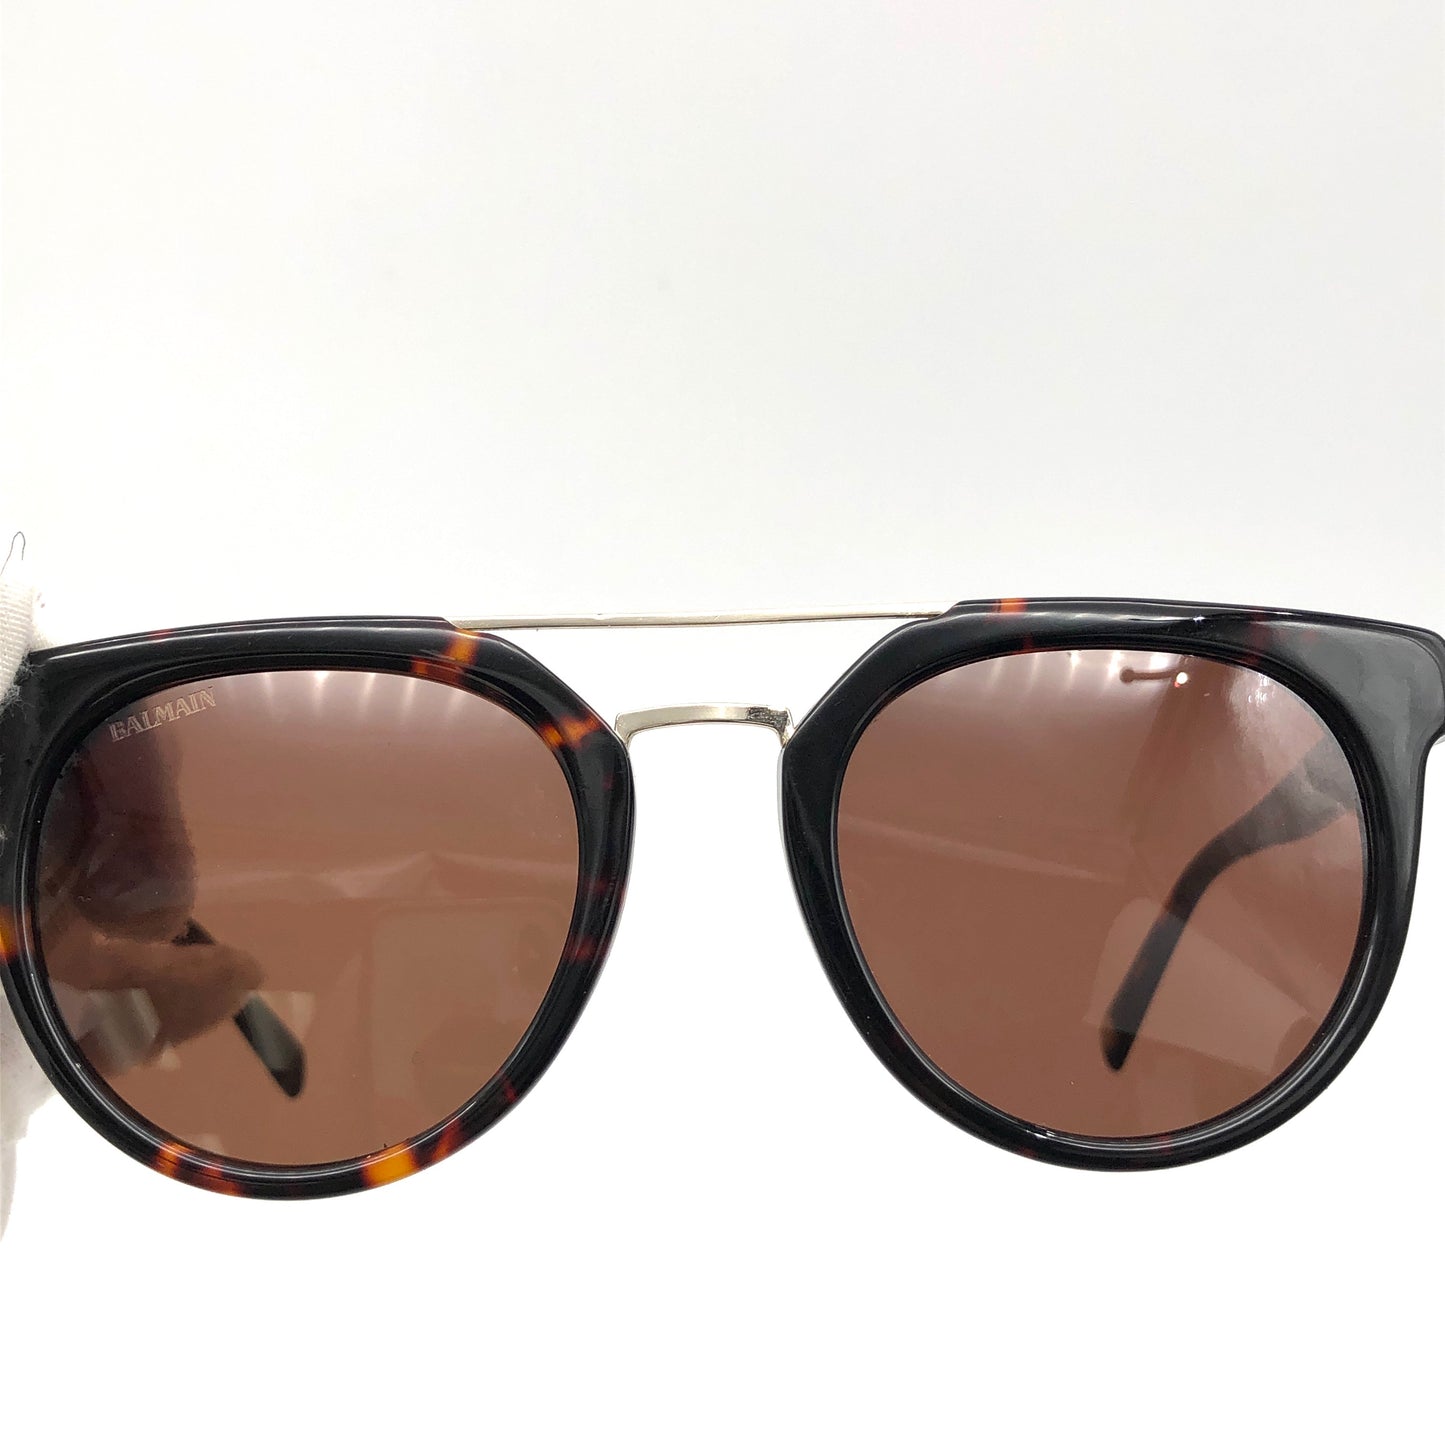 Sunglasses By Balmain